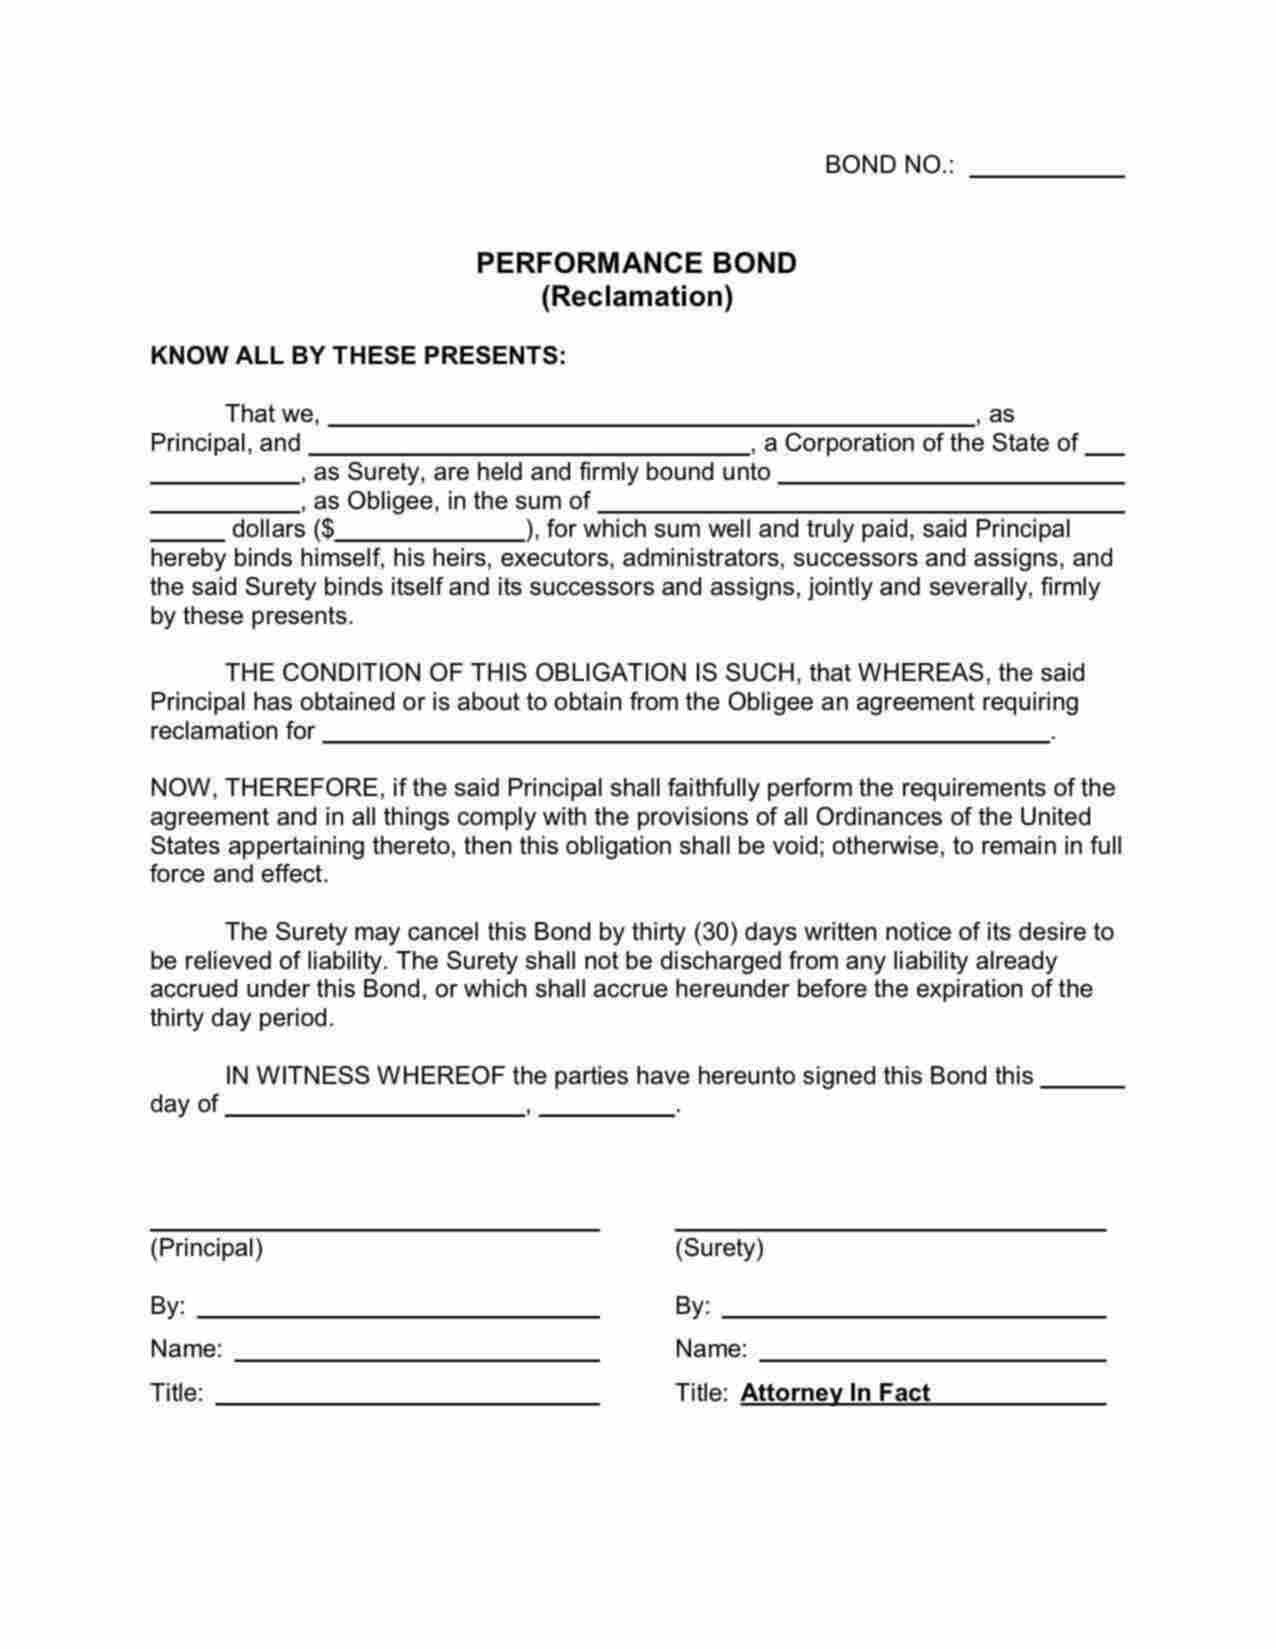 Virginia Reclamation Performance Bond Form